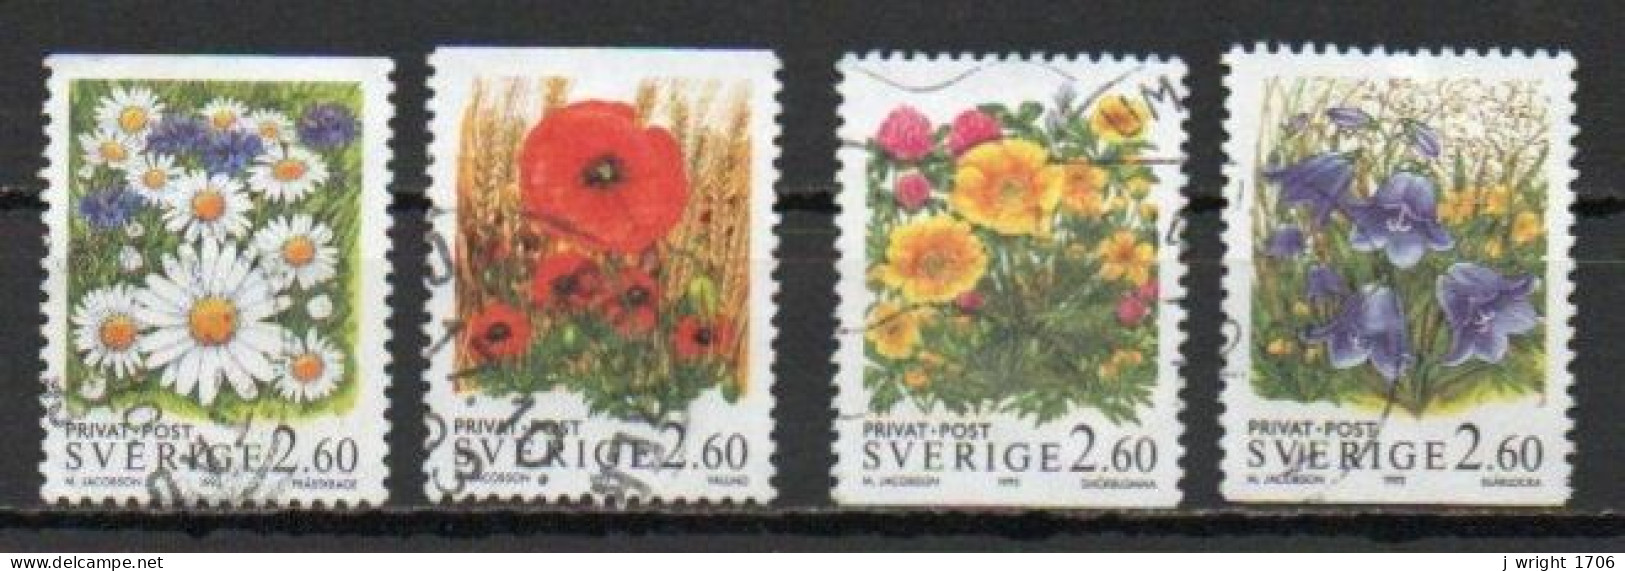 Sweden, 1993, Rebate Stamps/Flowers, Set, USED - Used Stamps